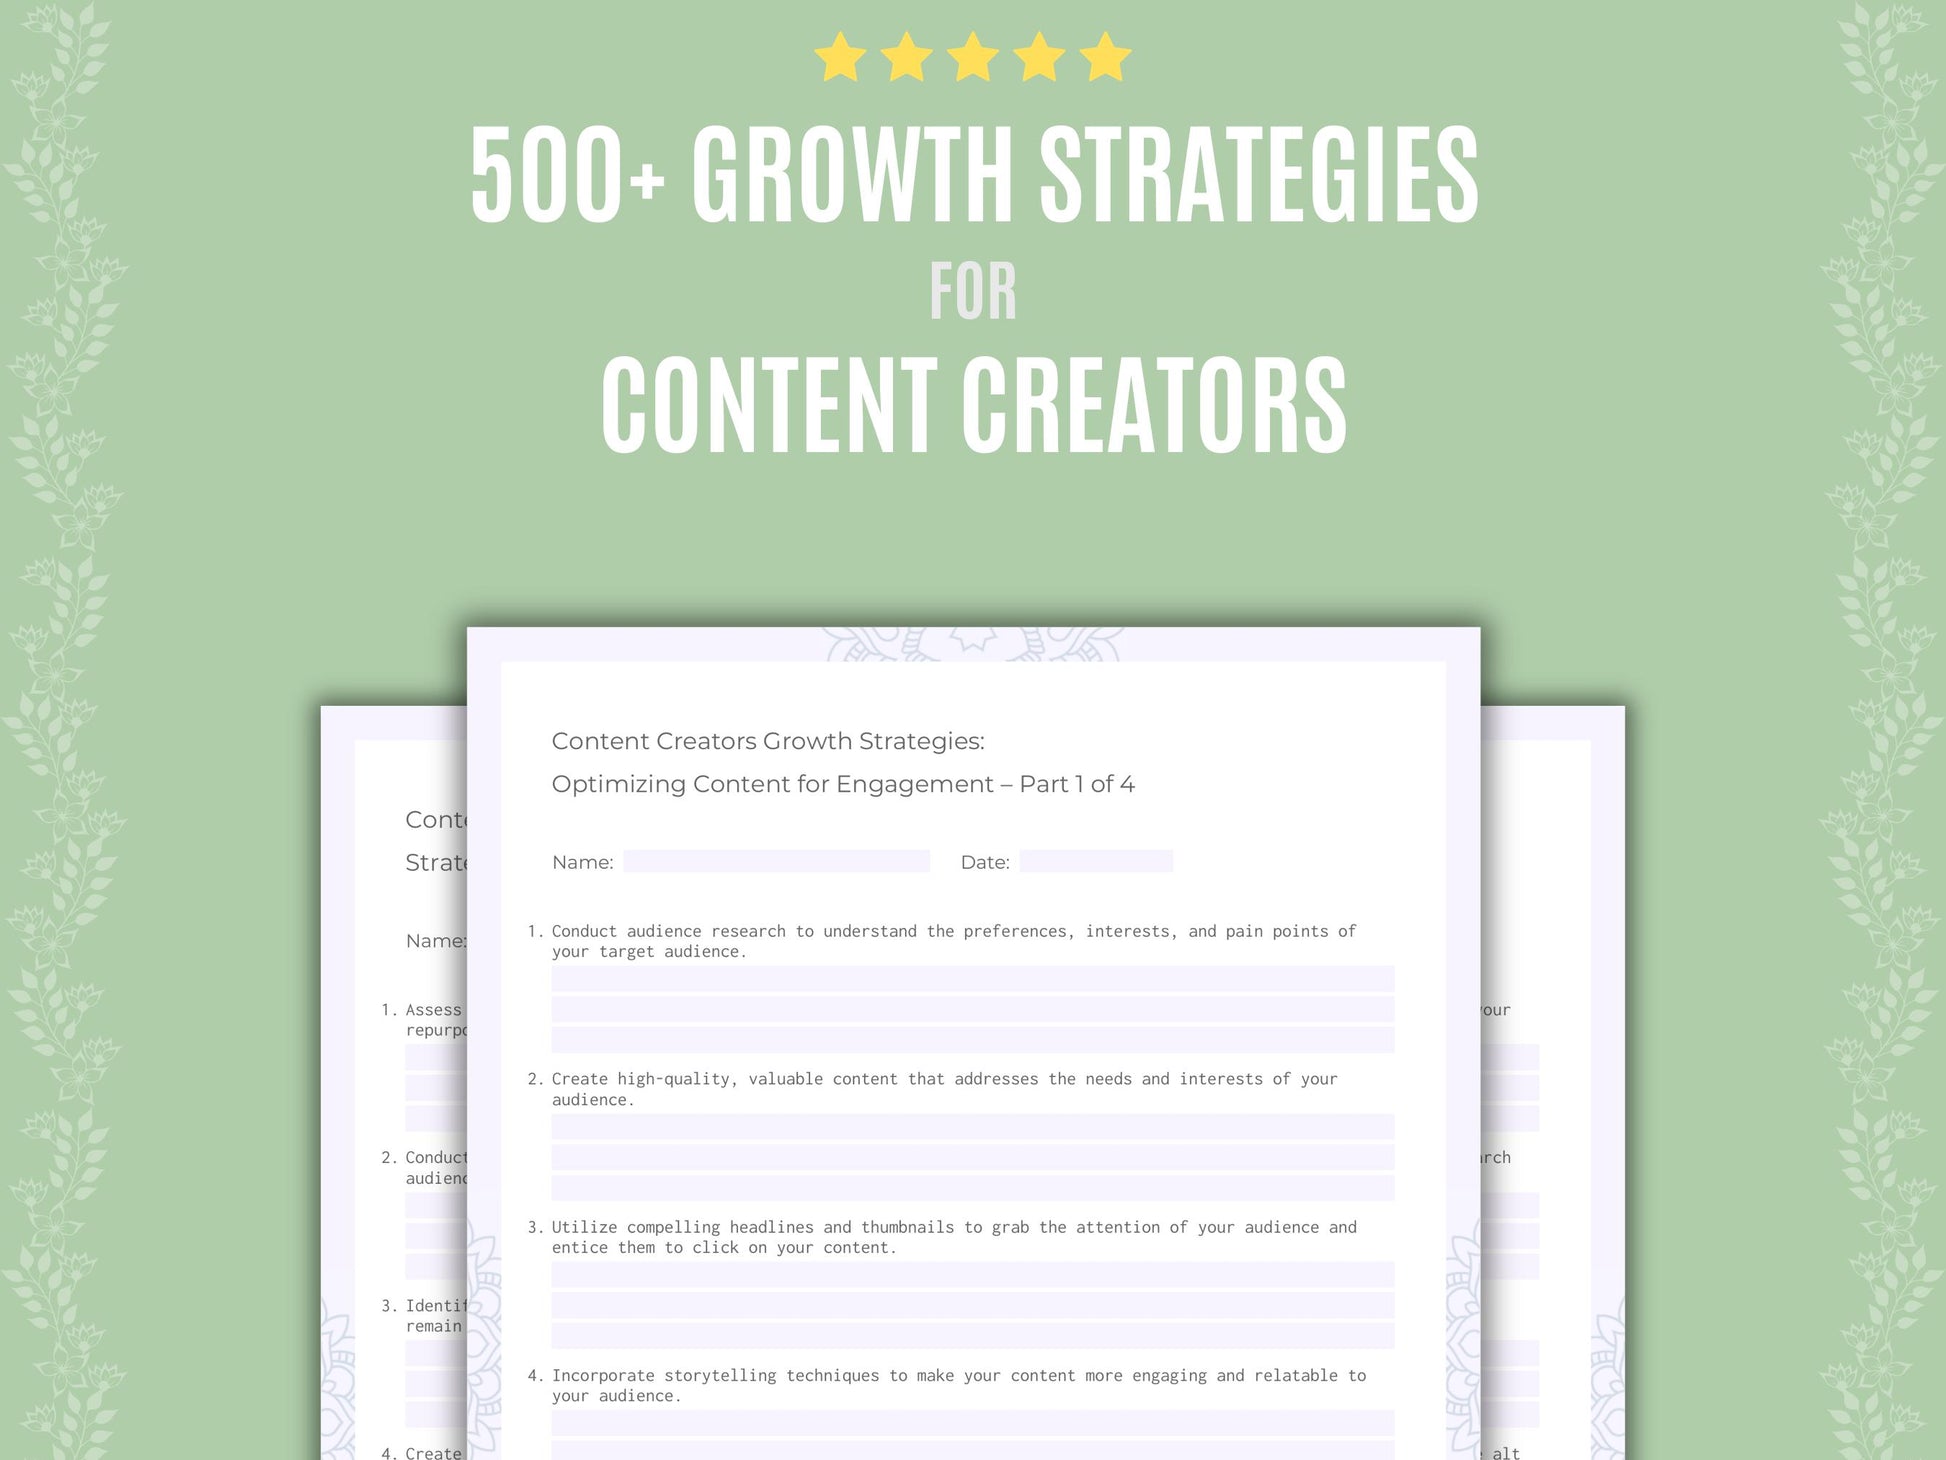 Content Creators Growth Strategies Resource